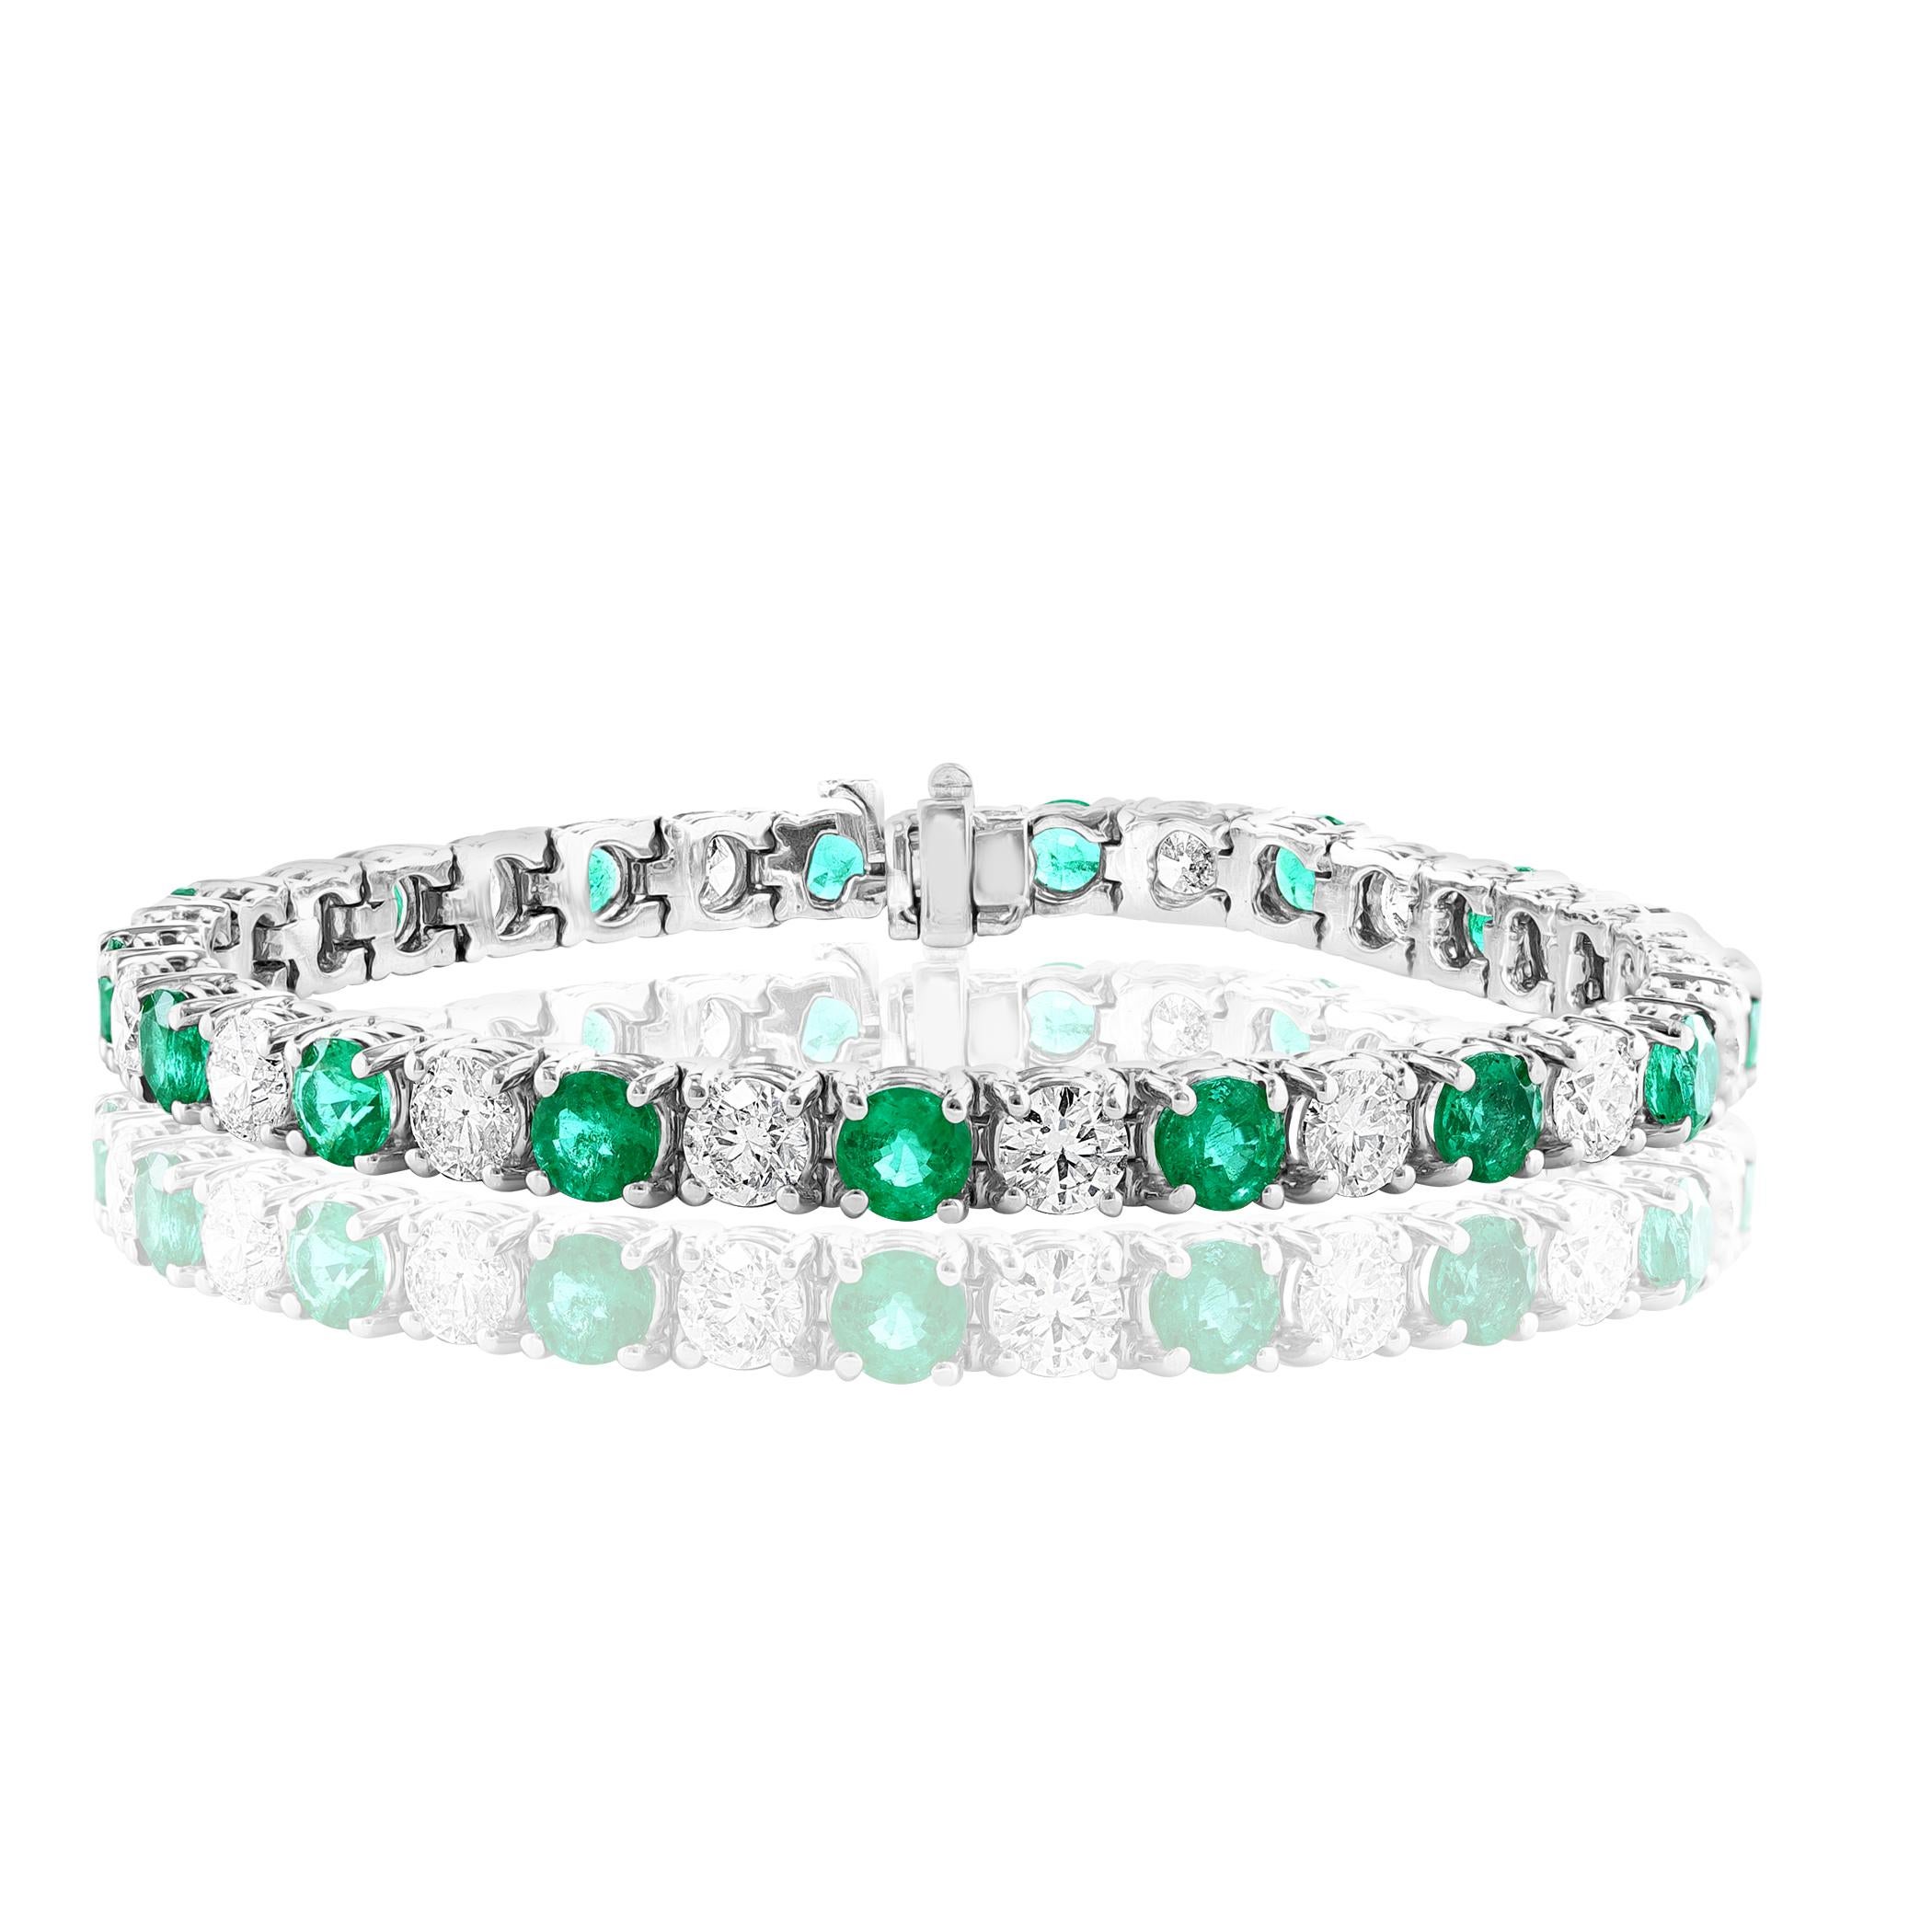 Brilliant Cut 7.48 Carat Emerald and Diamond Tennis Bracelet in 14K White Gold For Sale